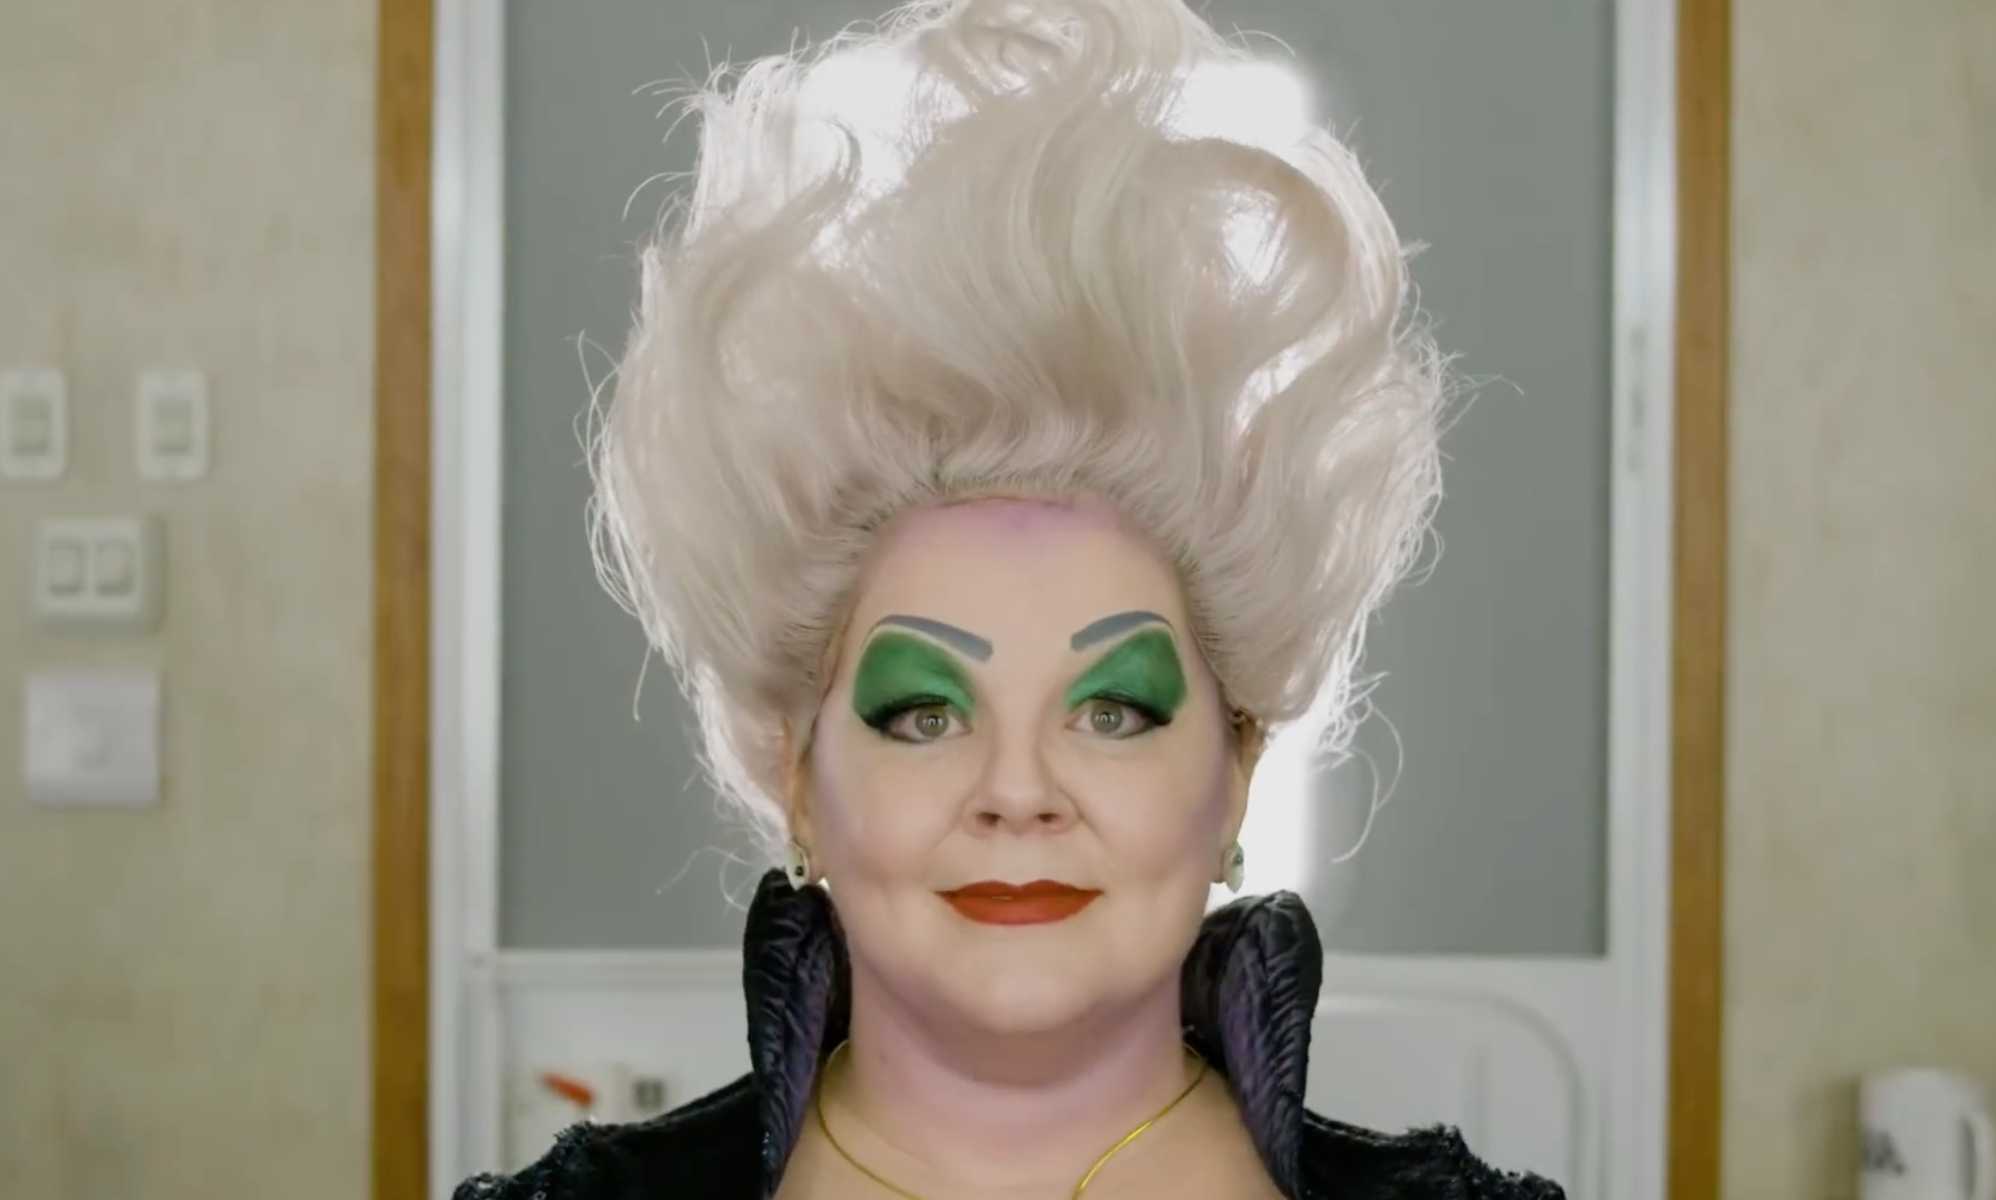 Melissa McCarthy's Ursula makeup routine sparks backlash PinkNews